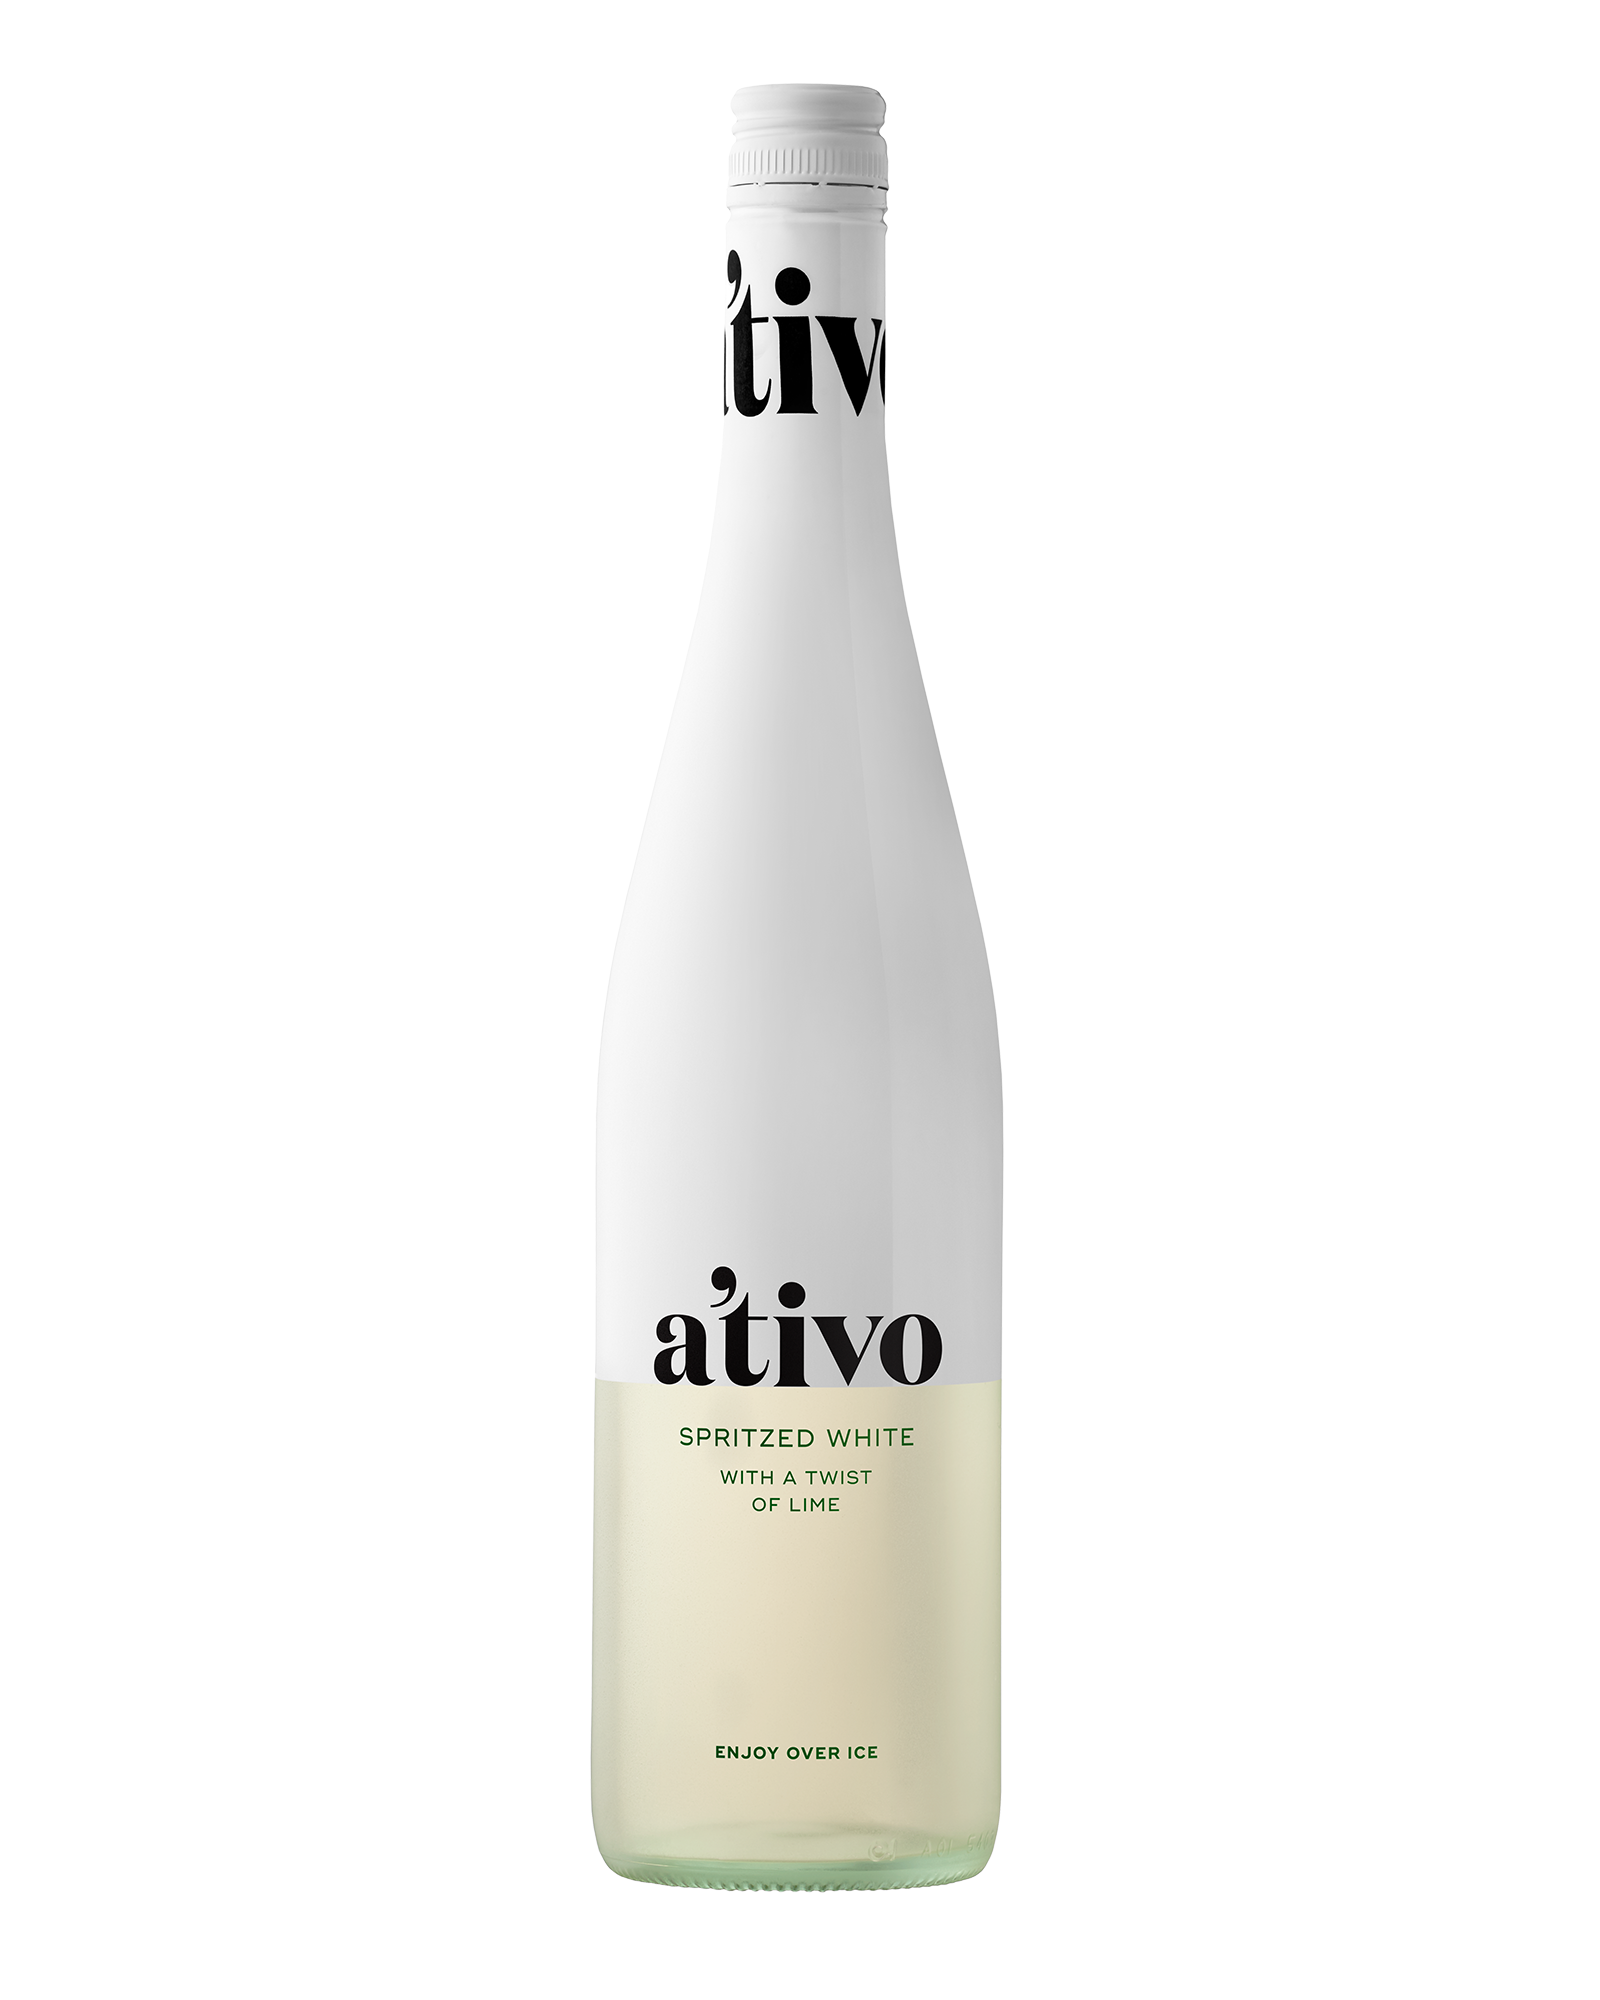 Ativo Spritzed White